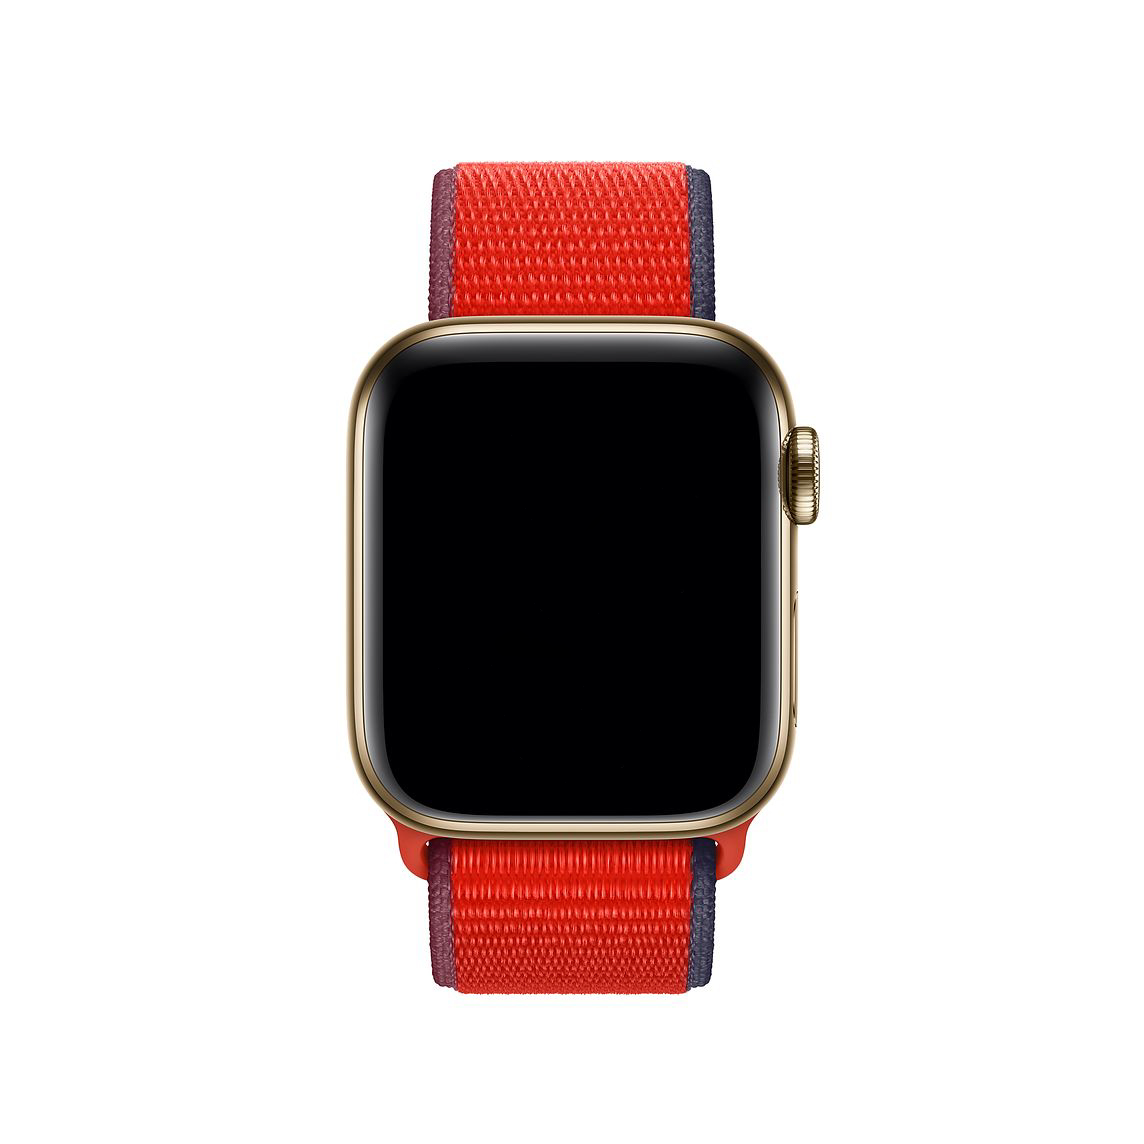 Bracelet boucle sport en nylon Apple Watch - rouge tricolore